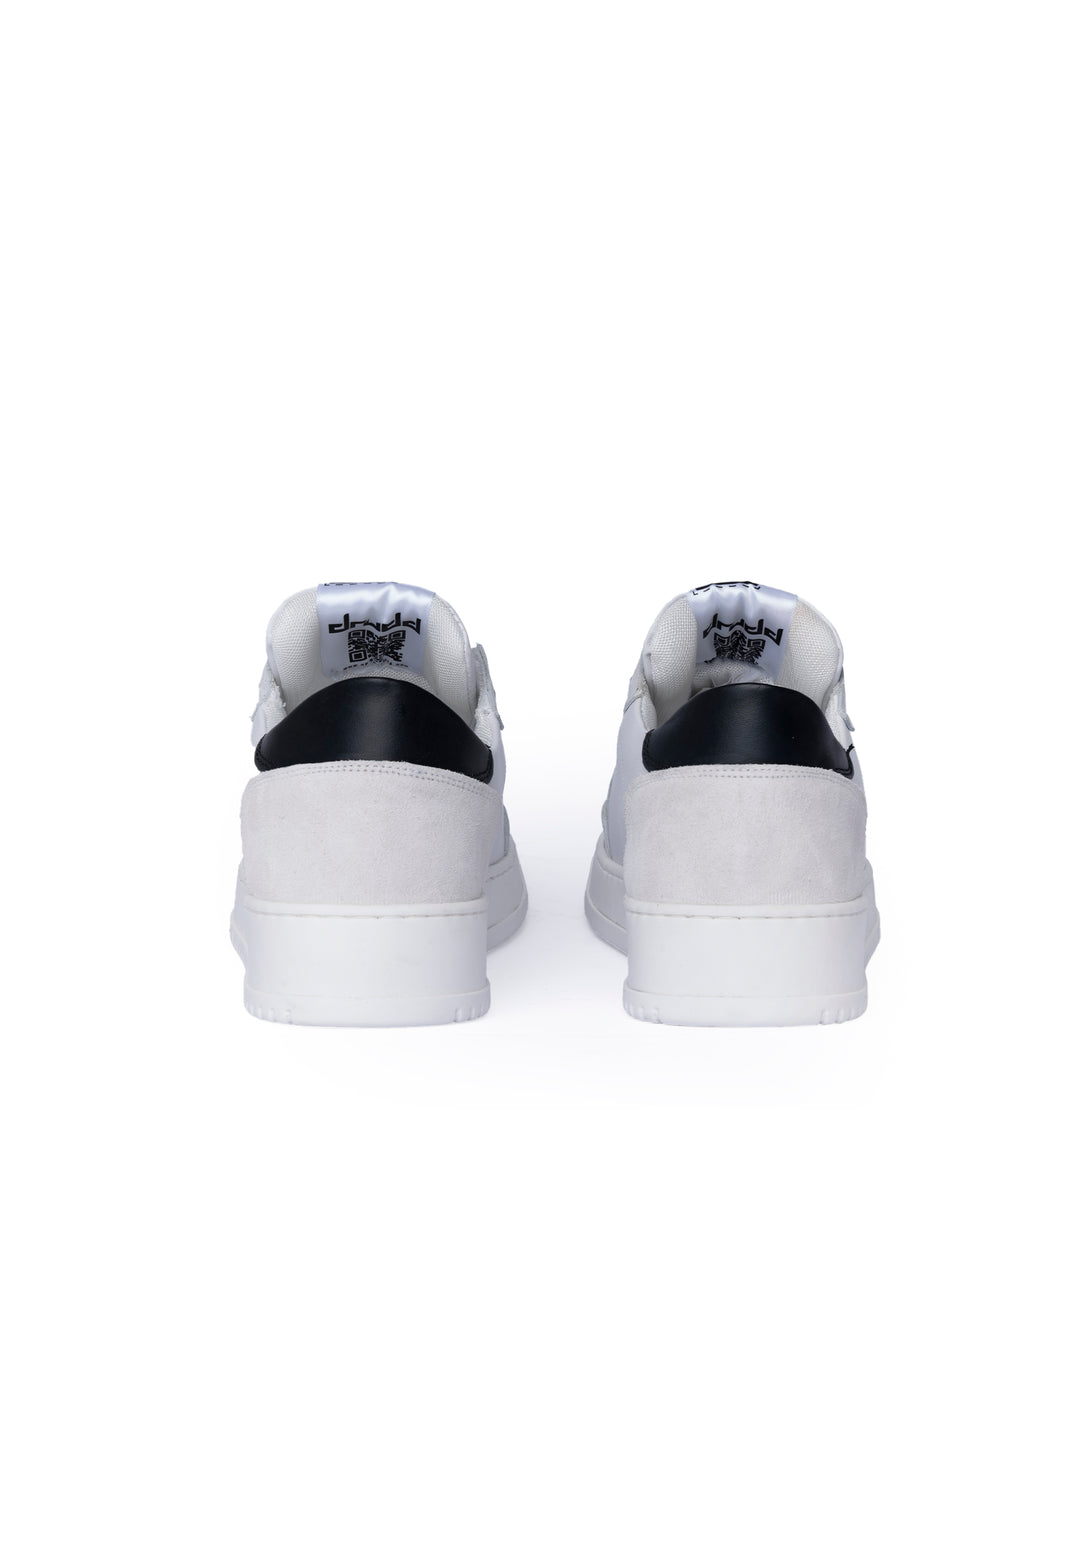 Sneakers Pelle Bianca e Nera - D-310